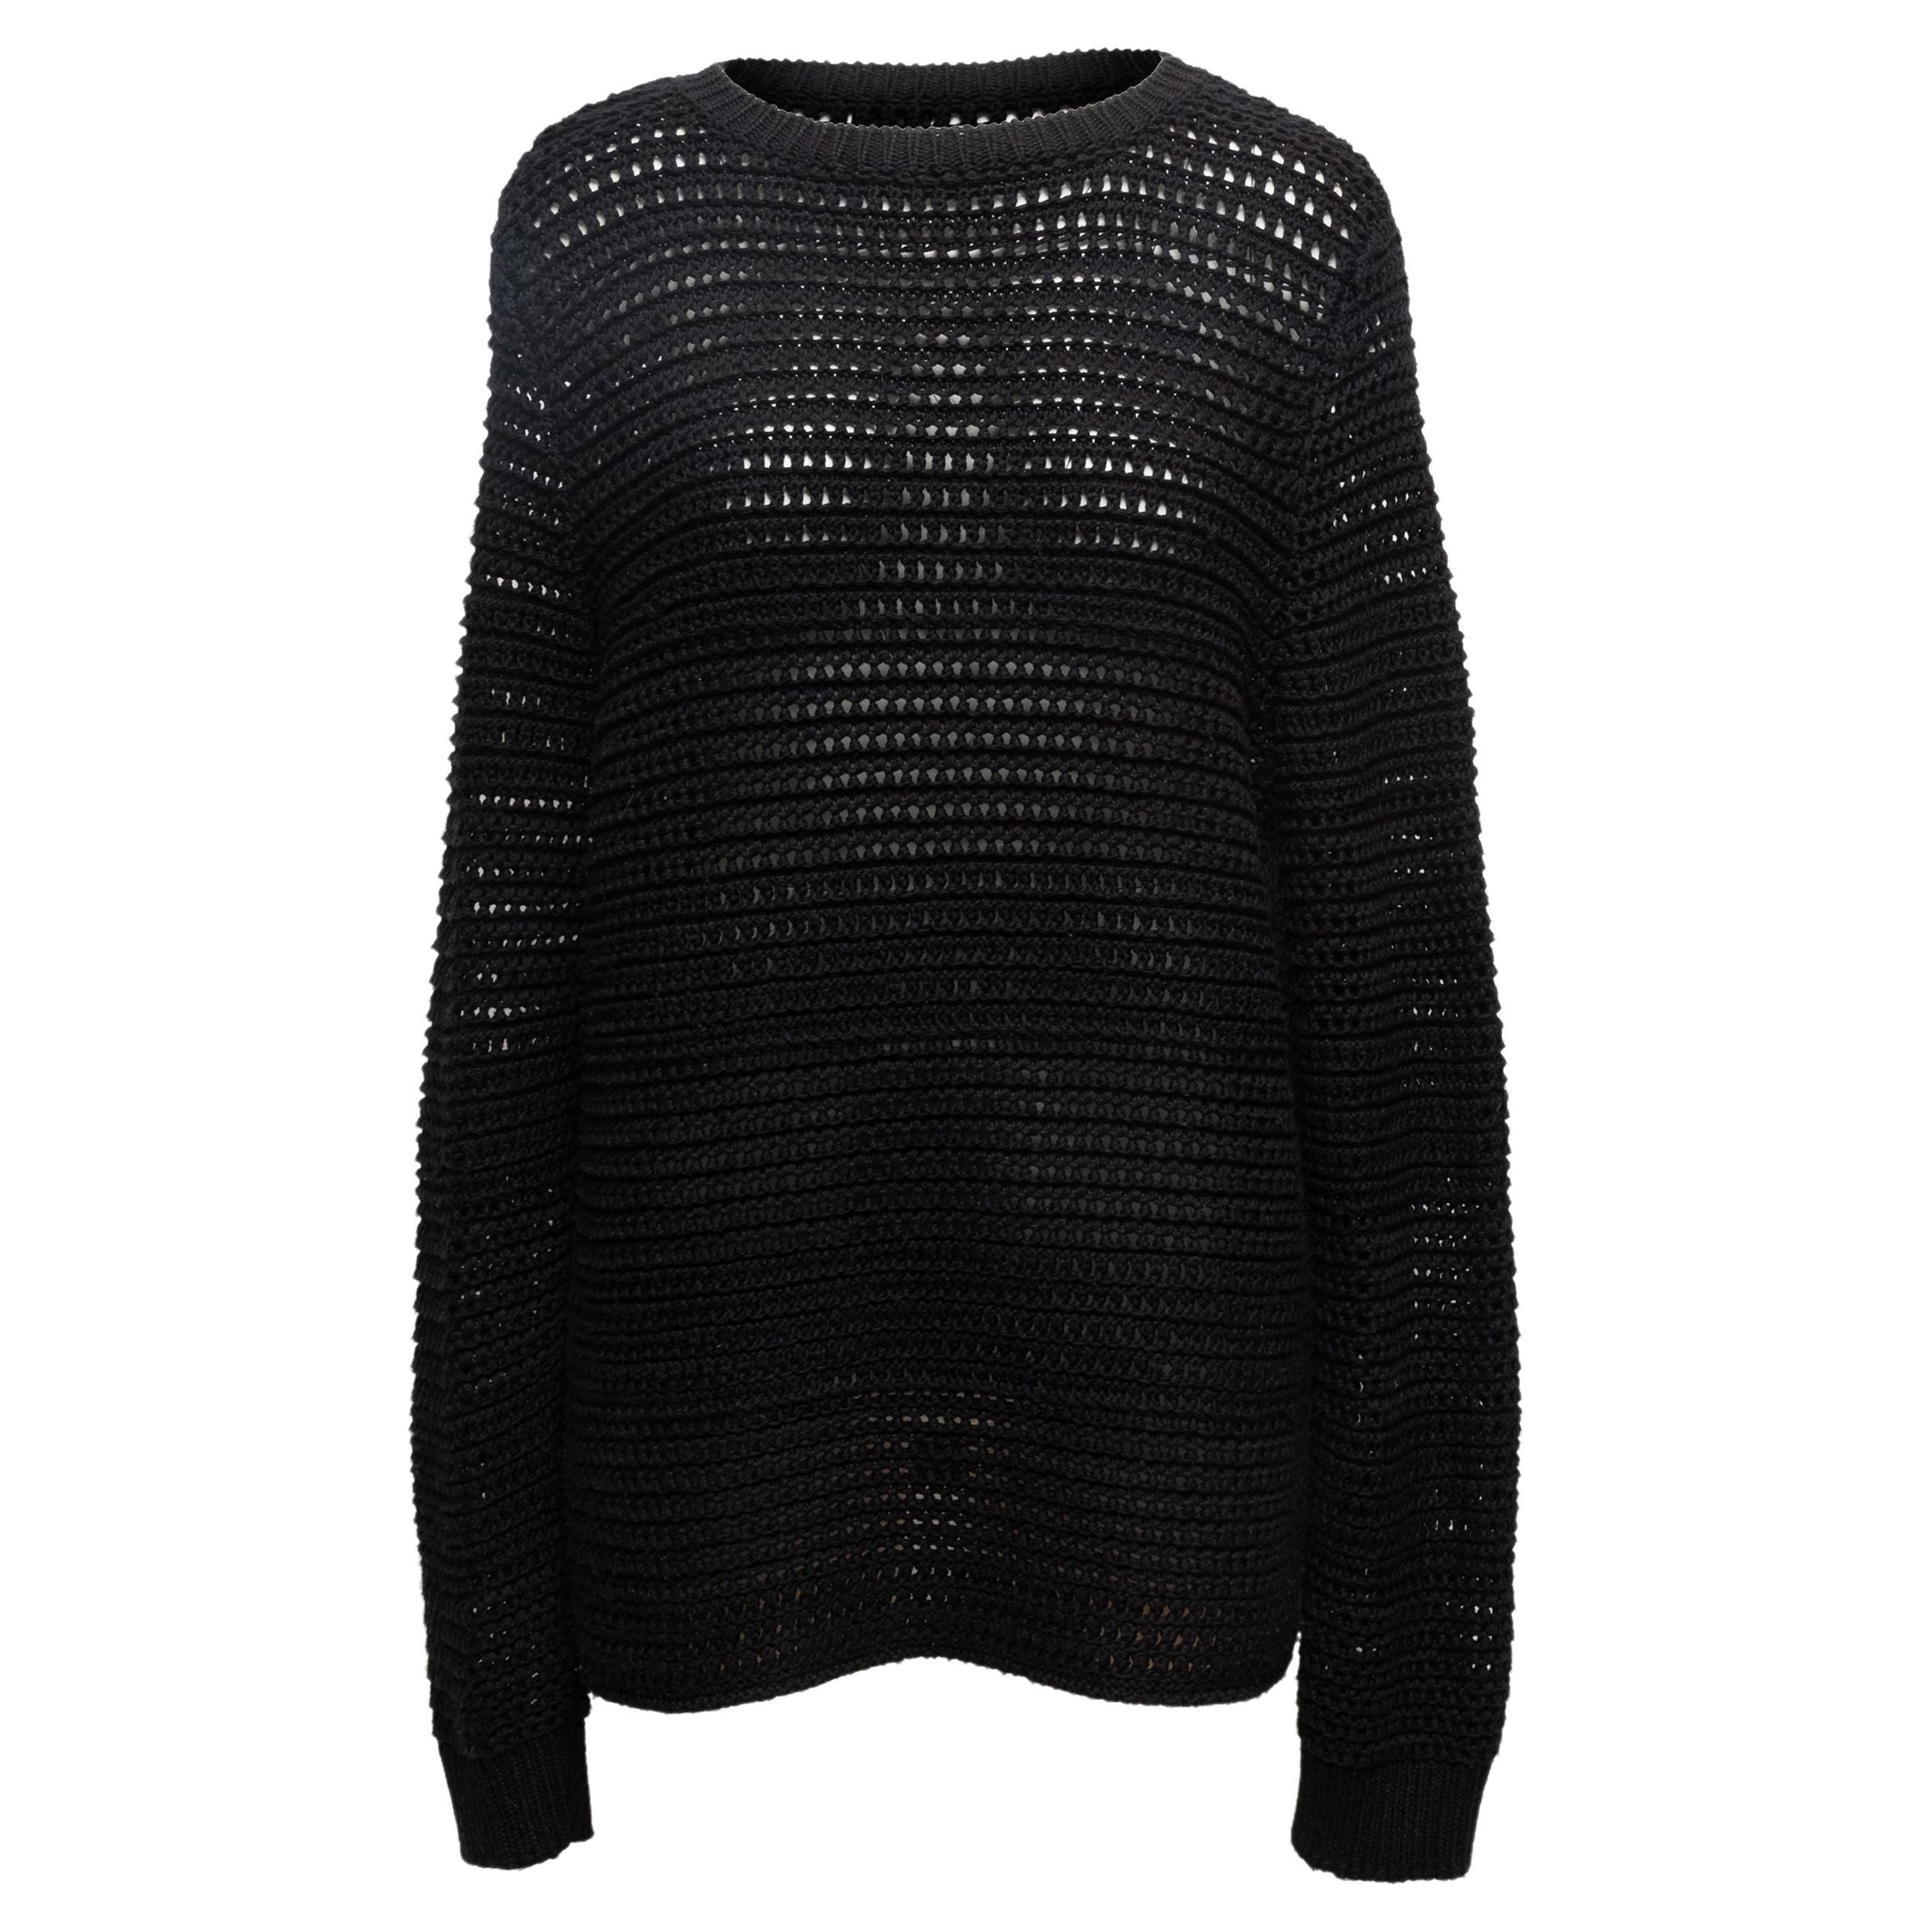 Black Open Knit Sweater - 63 For Sale on 1stDibs